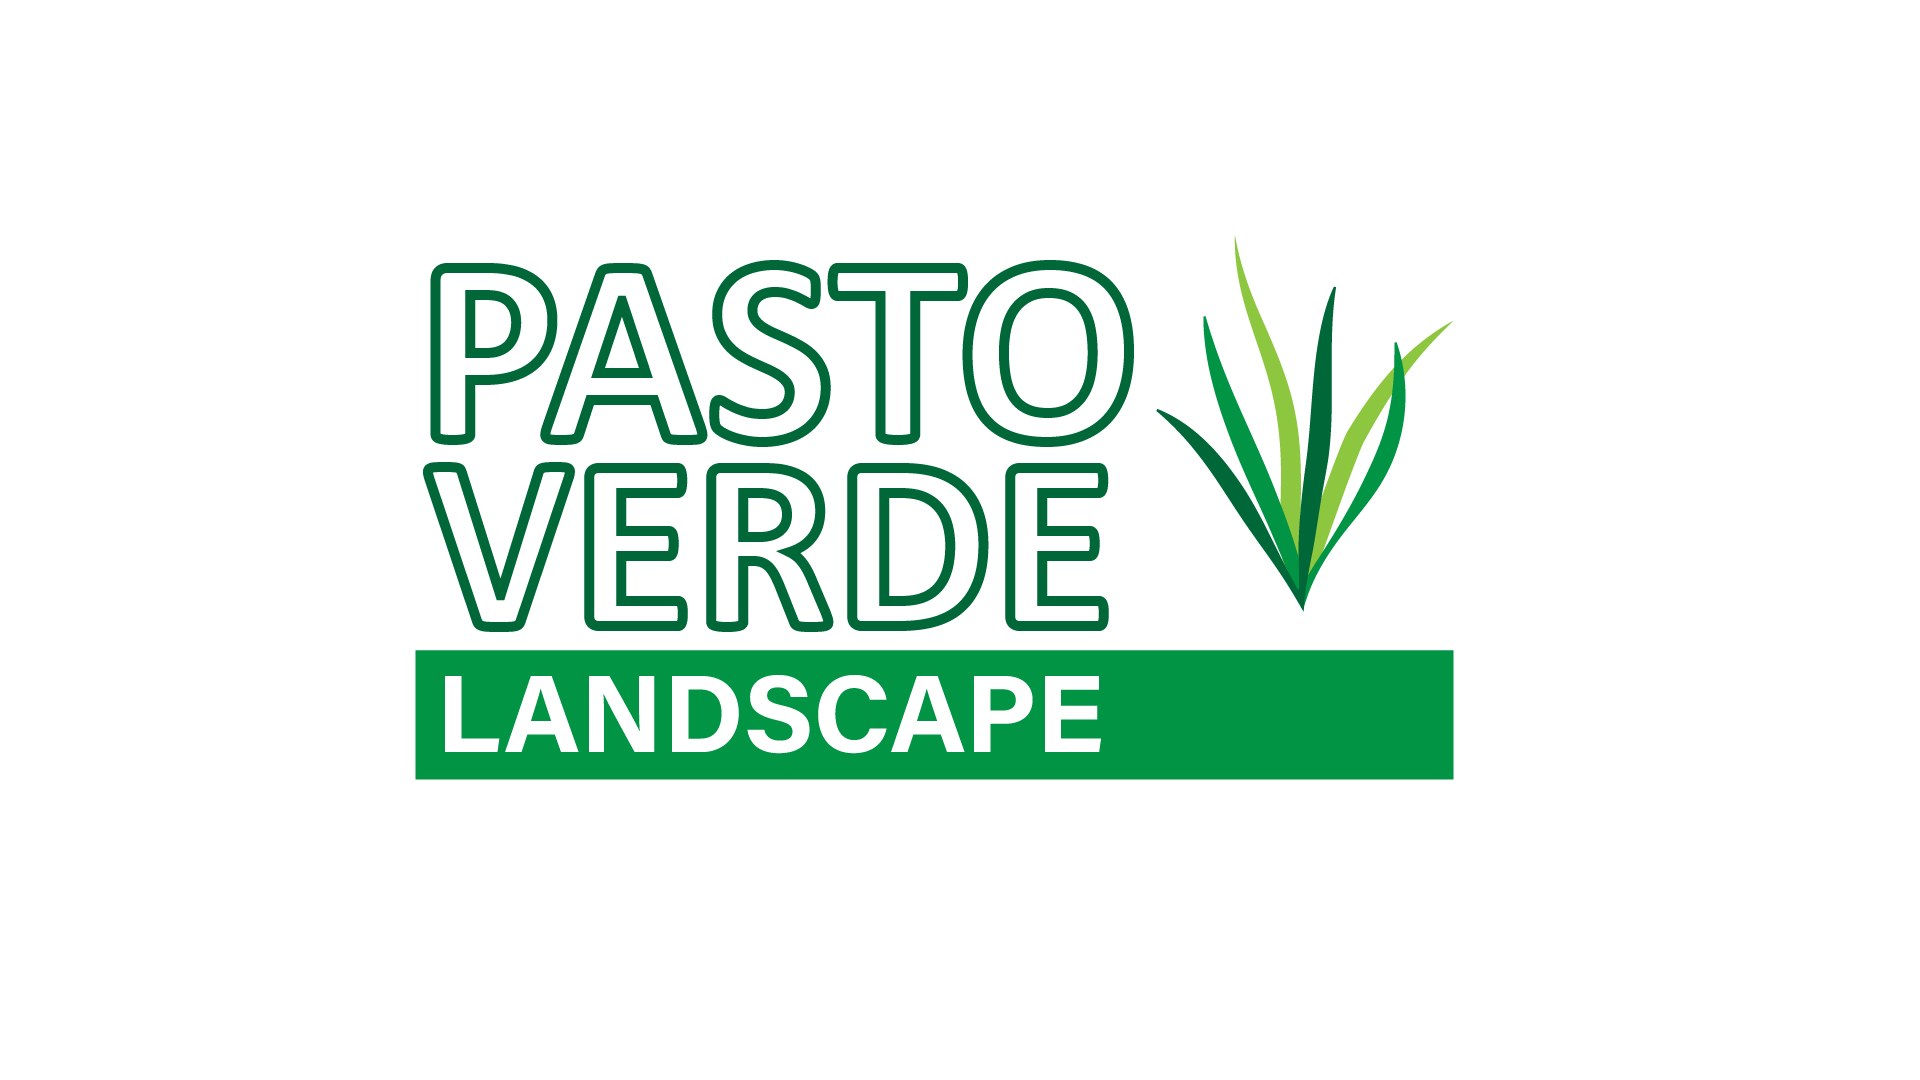 Pasto Verde Landscape's logo